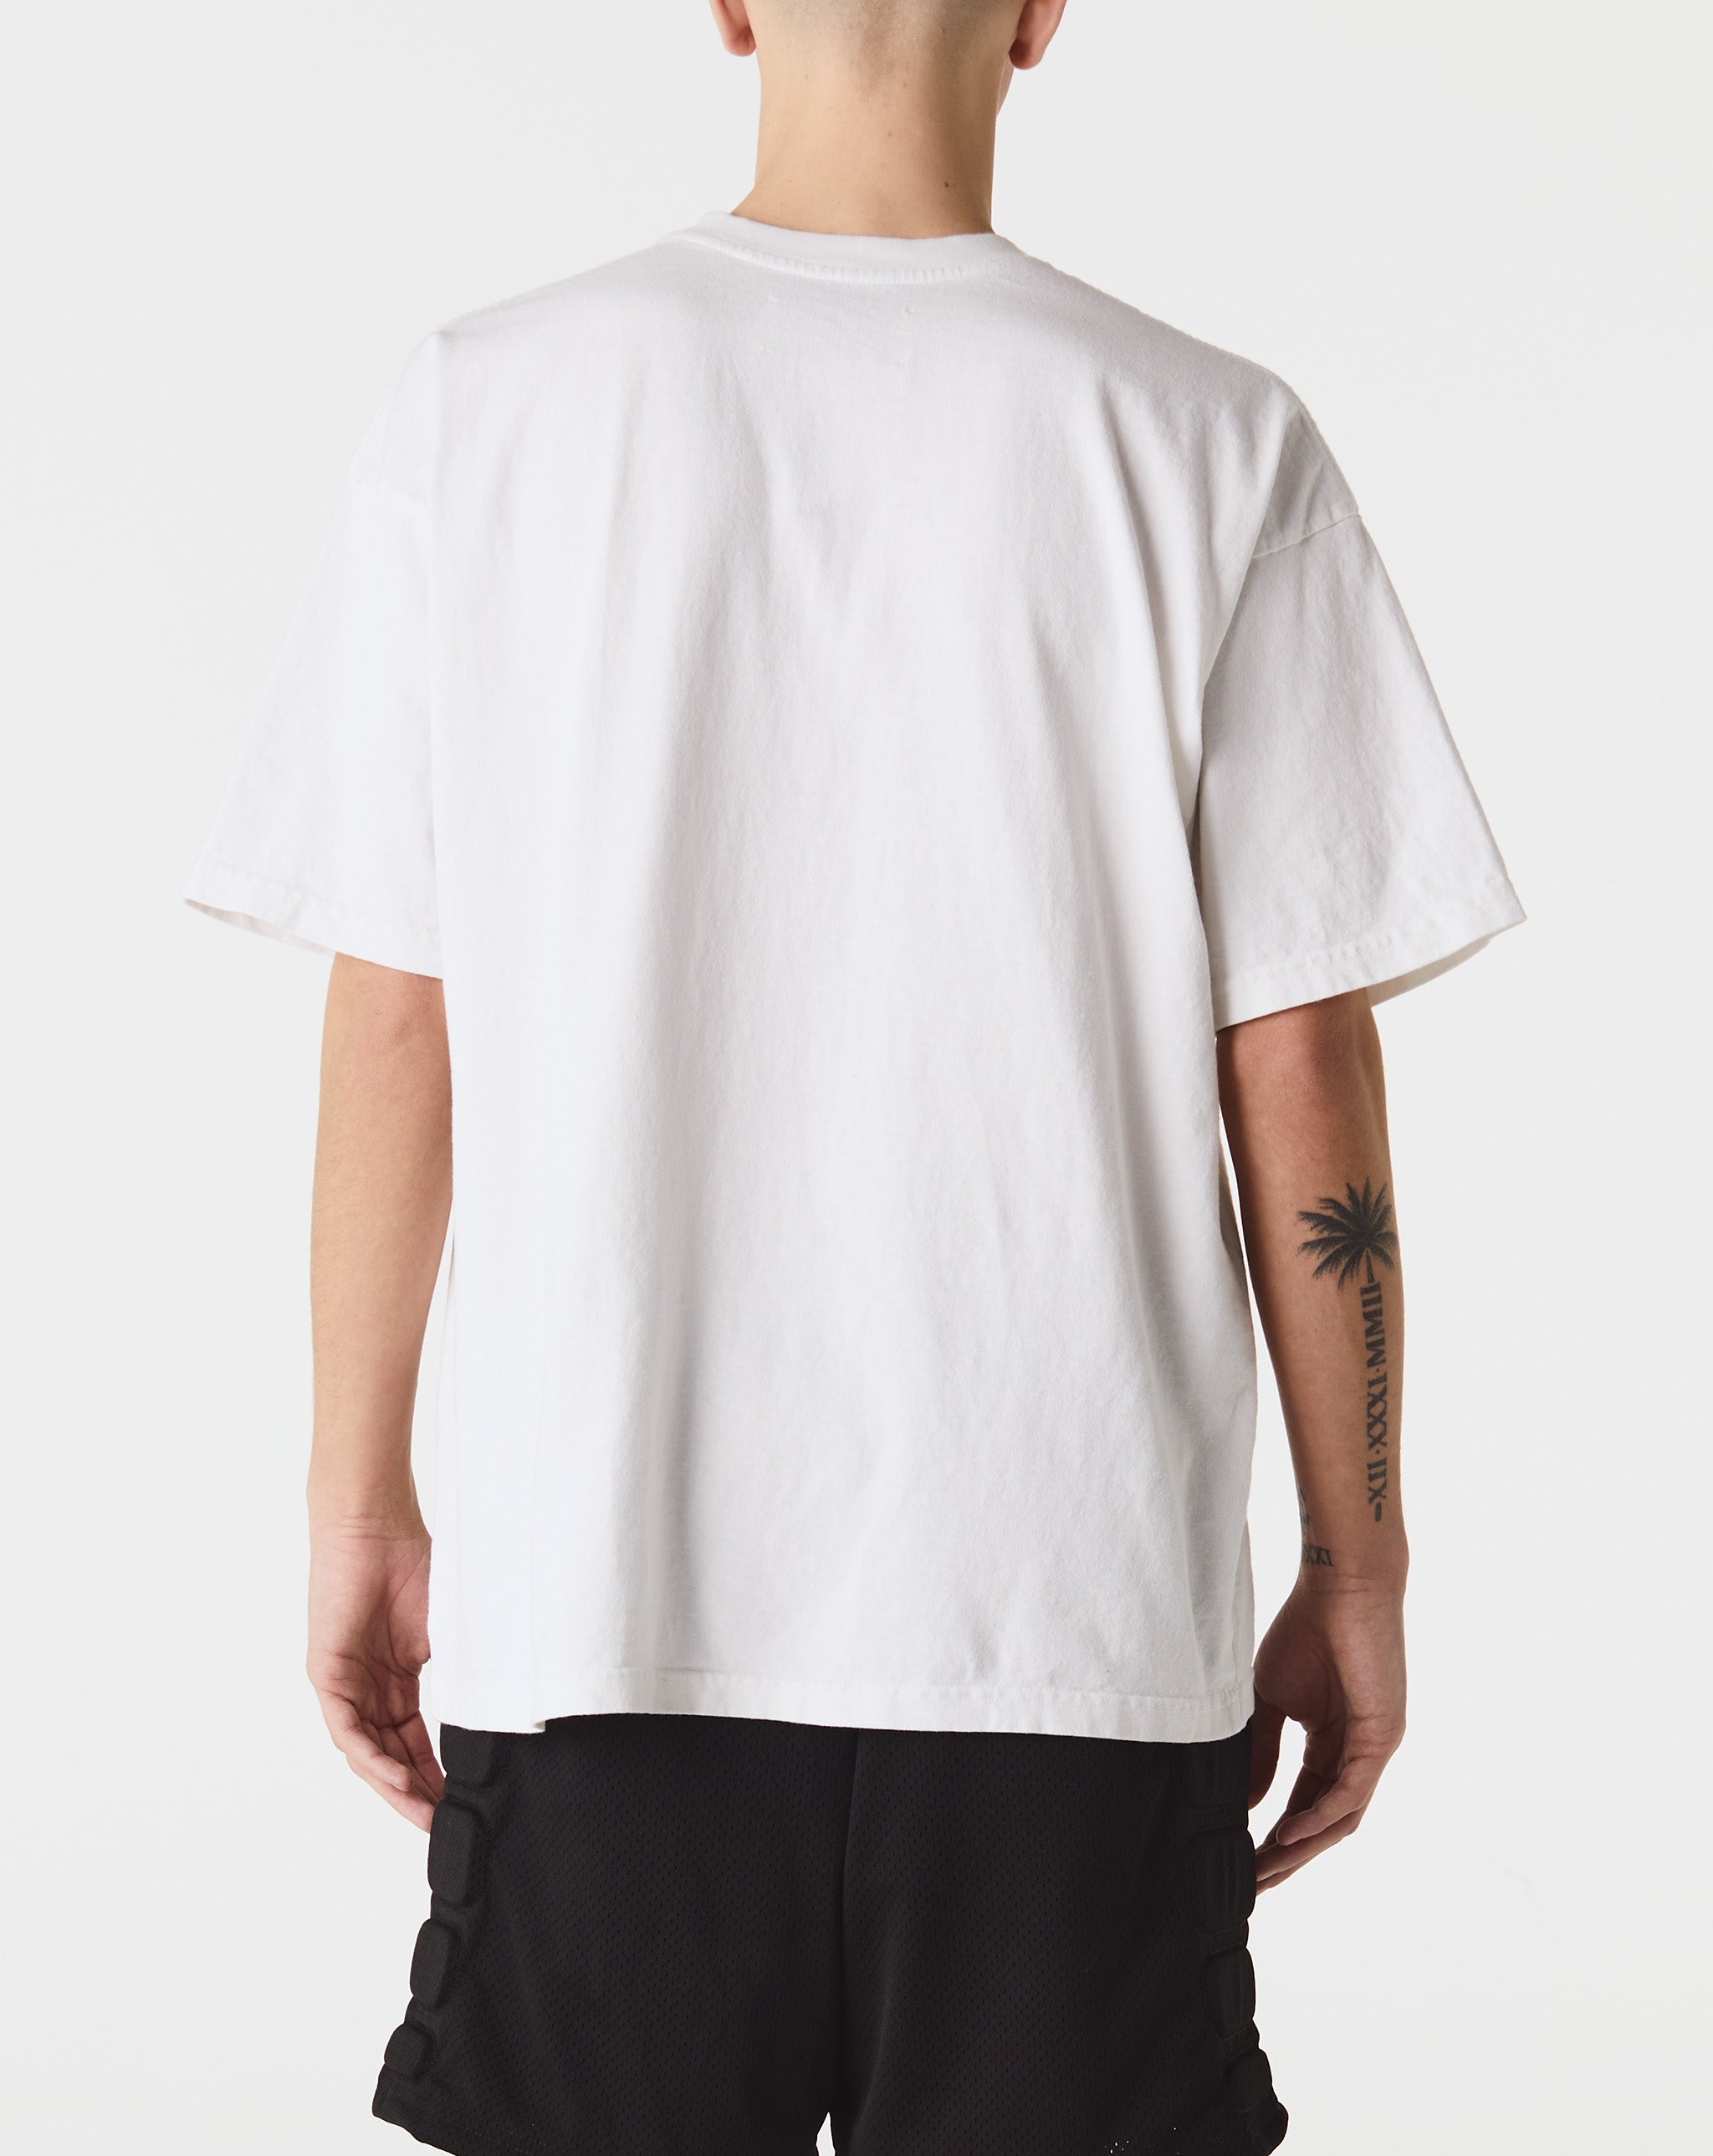 Satoshi Nakamoto Lost Happiness T-Shirt  - Cheap Cerbe Jordan outlet